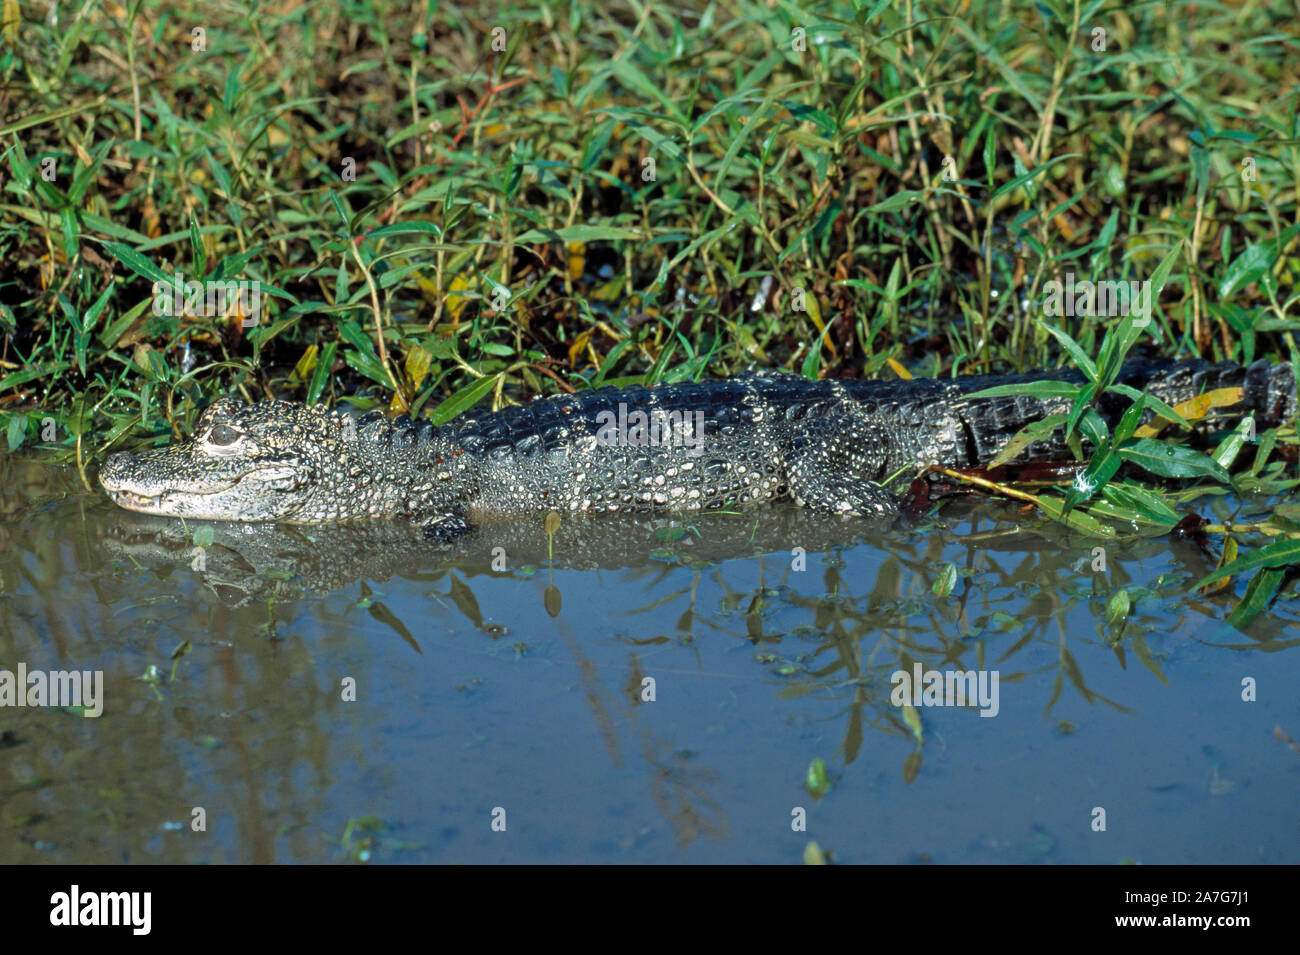 CHINESE ALLIGATOR  Alligator sinensis, in water, by vegetation. Stock Photo